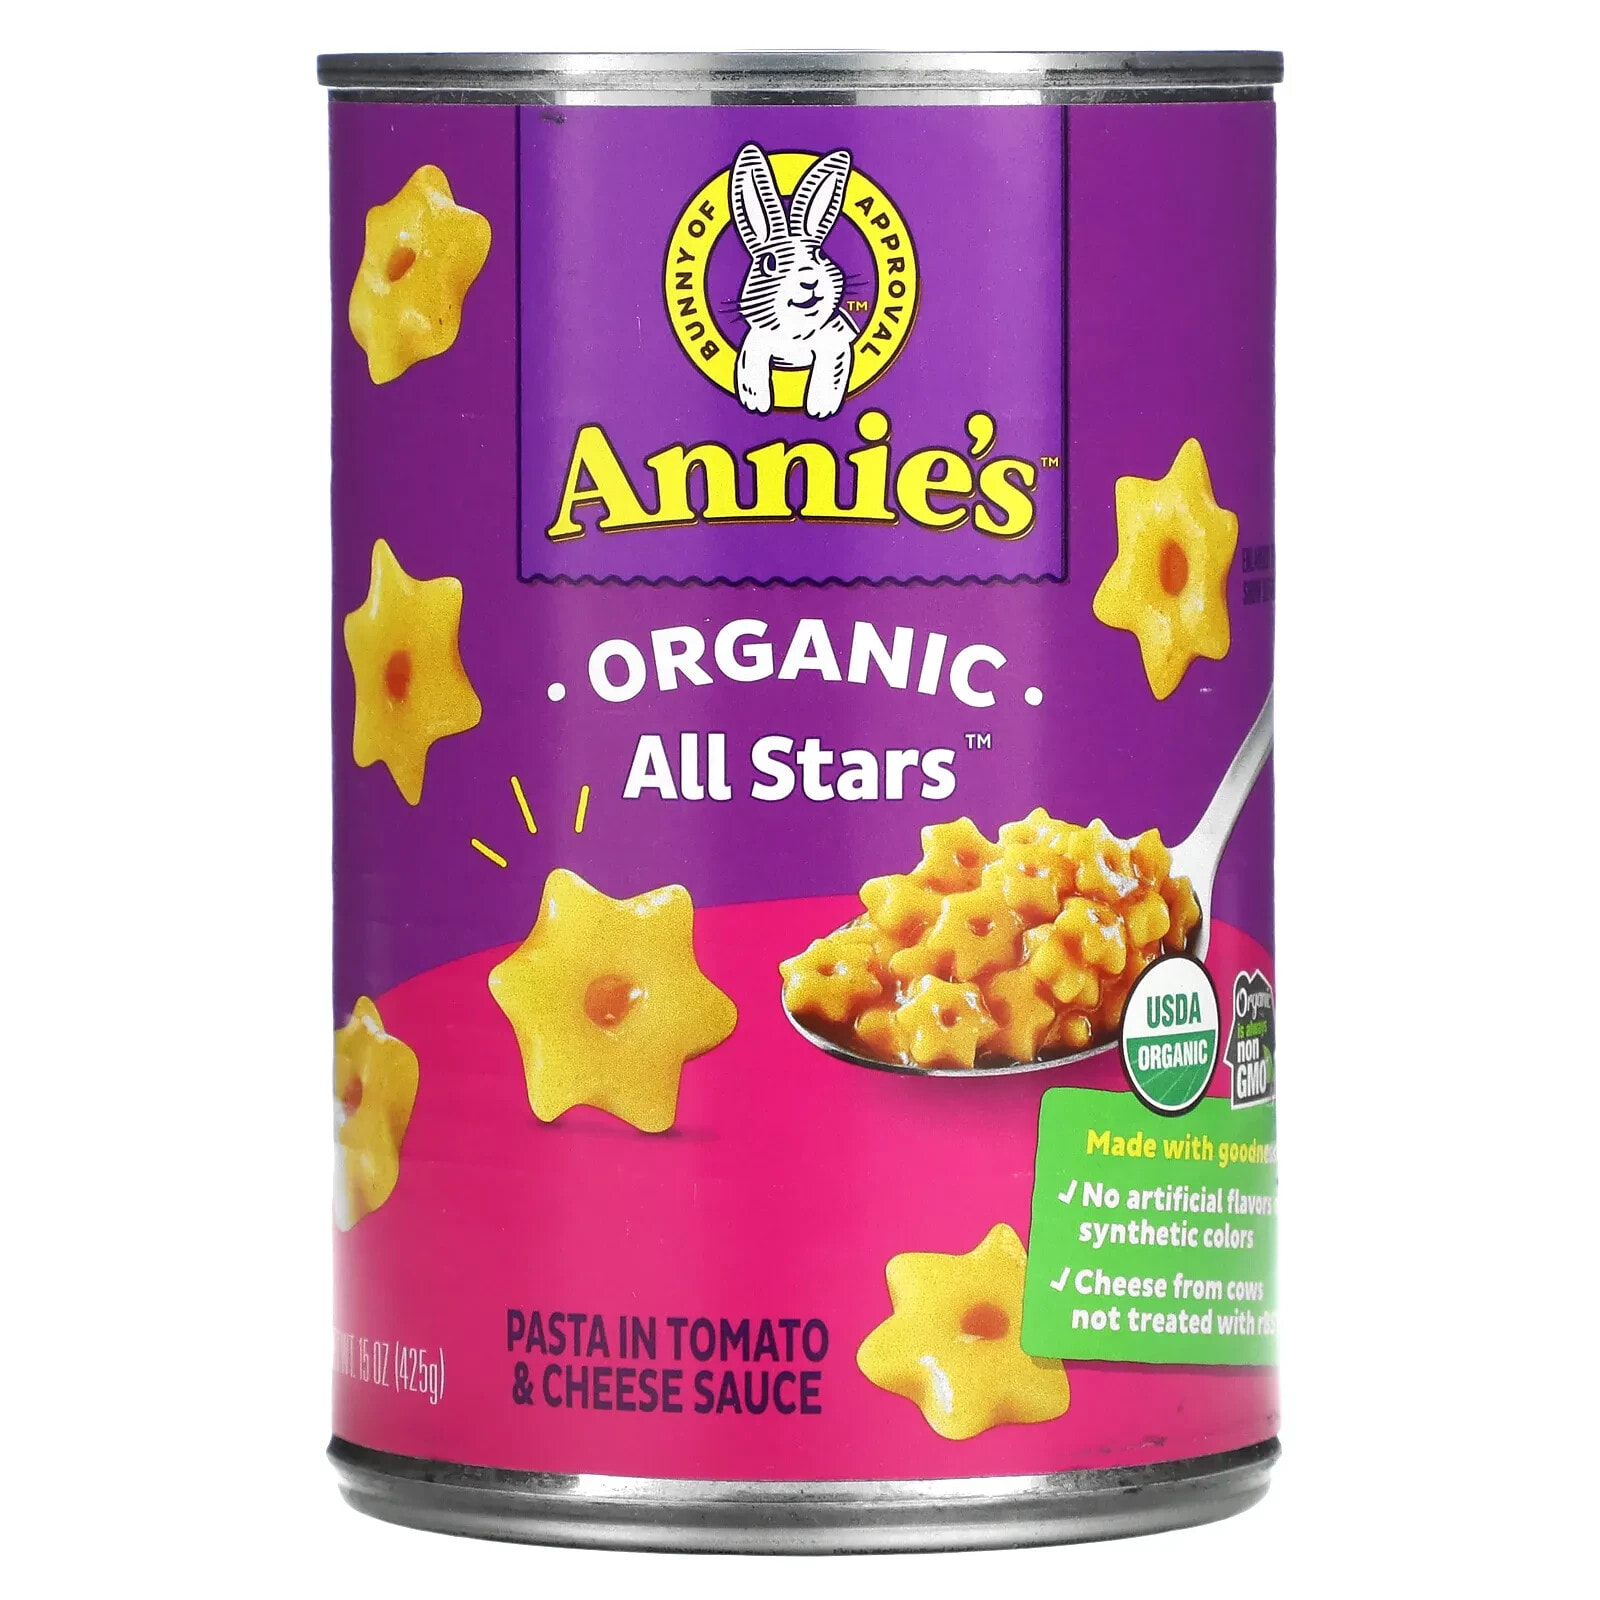 Annie's Homegrown, Organic All Stars, паста в томатном и сырном соусе, 425 г (15 унций)